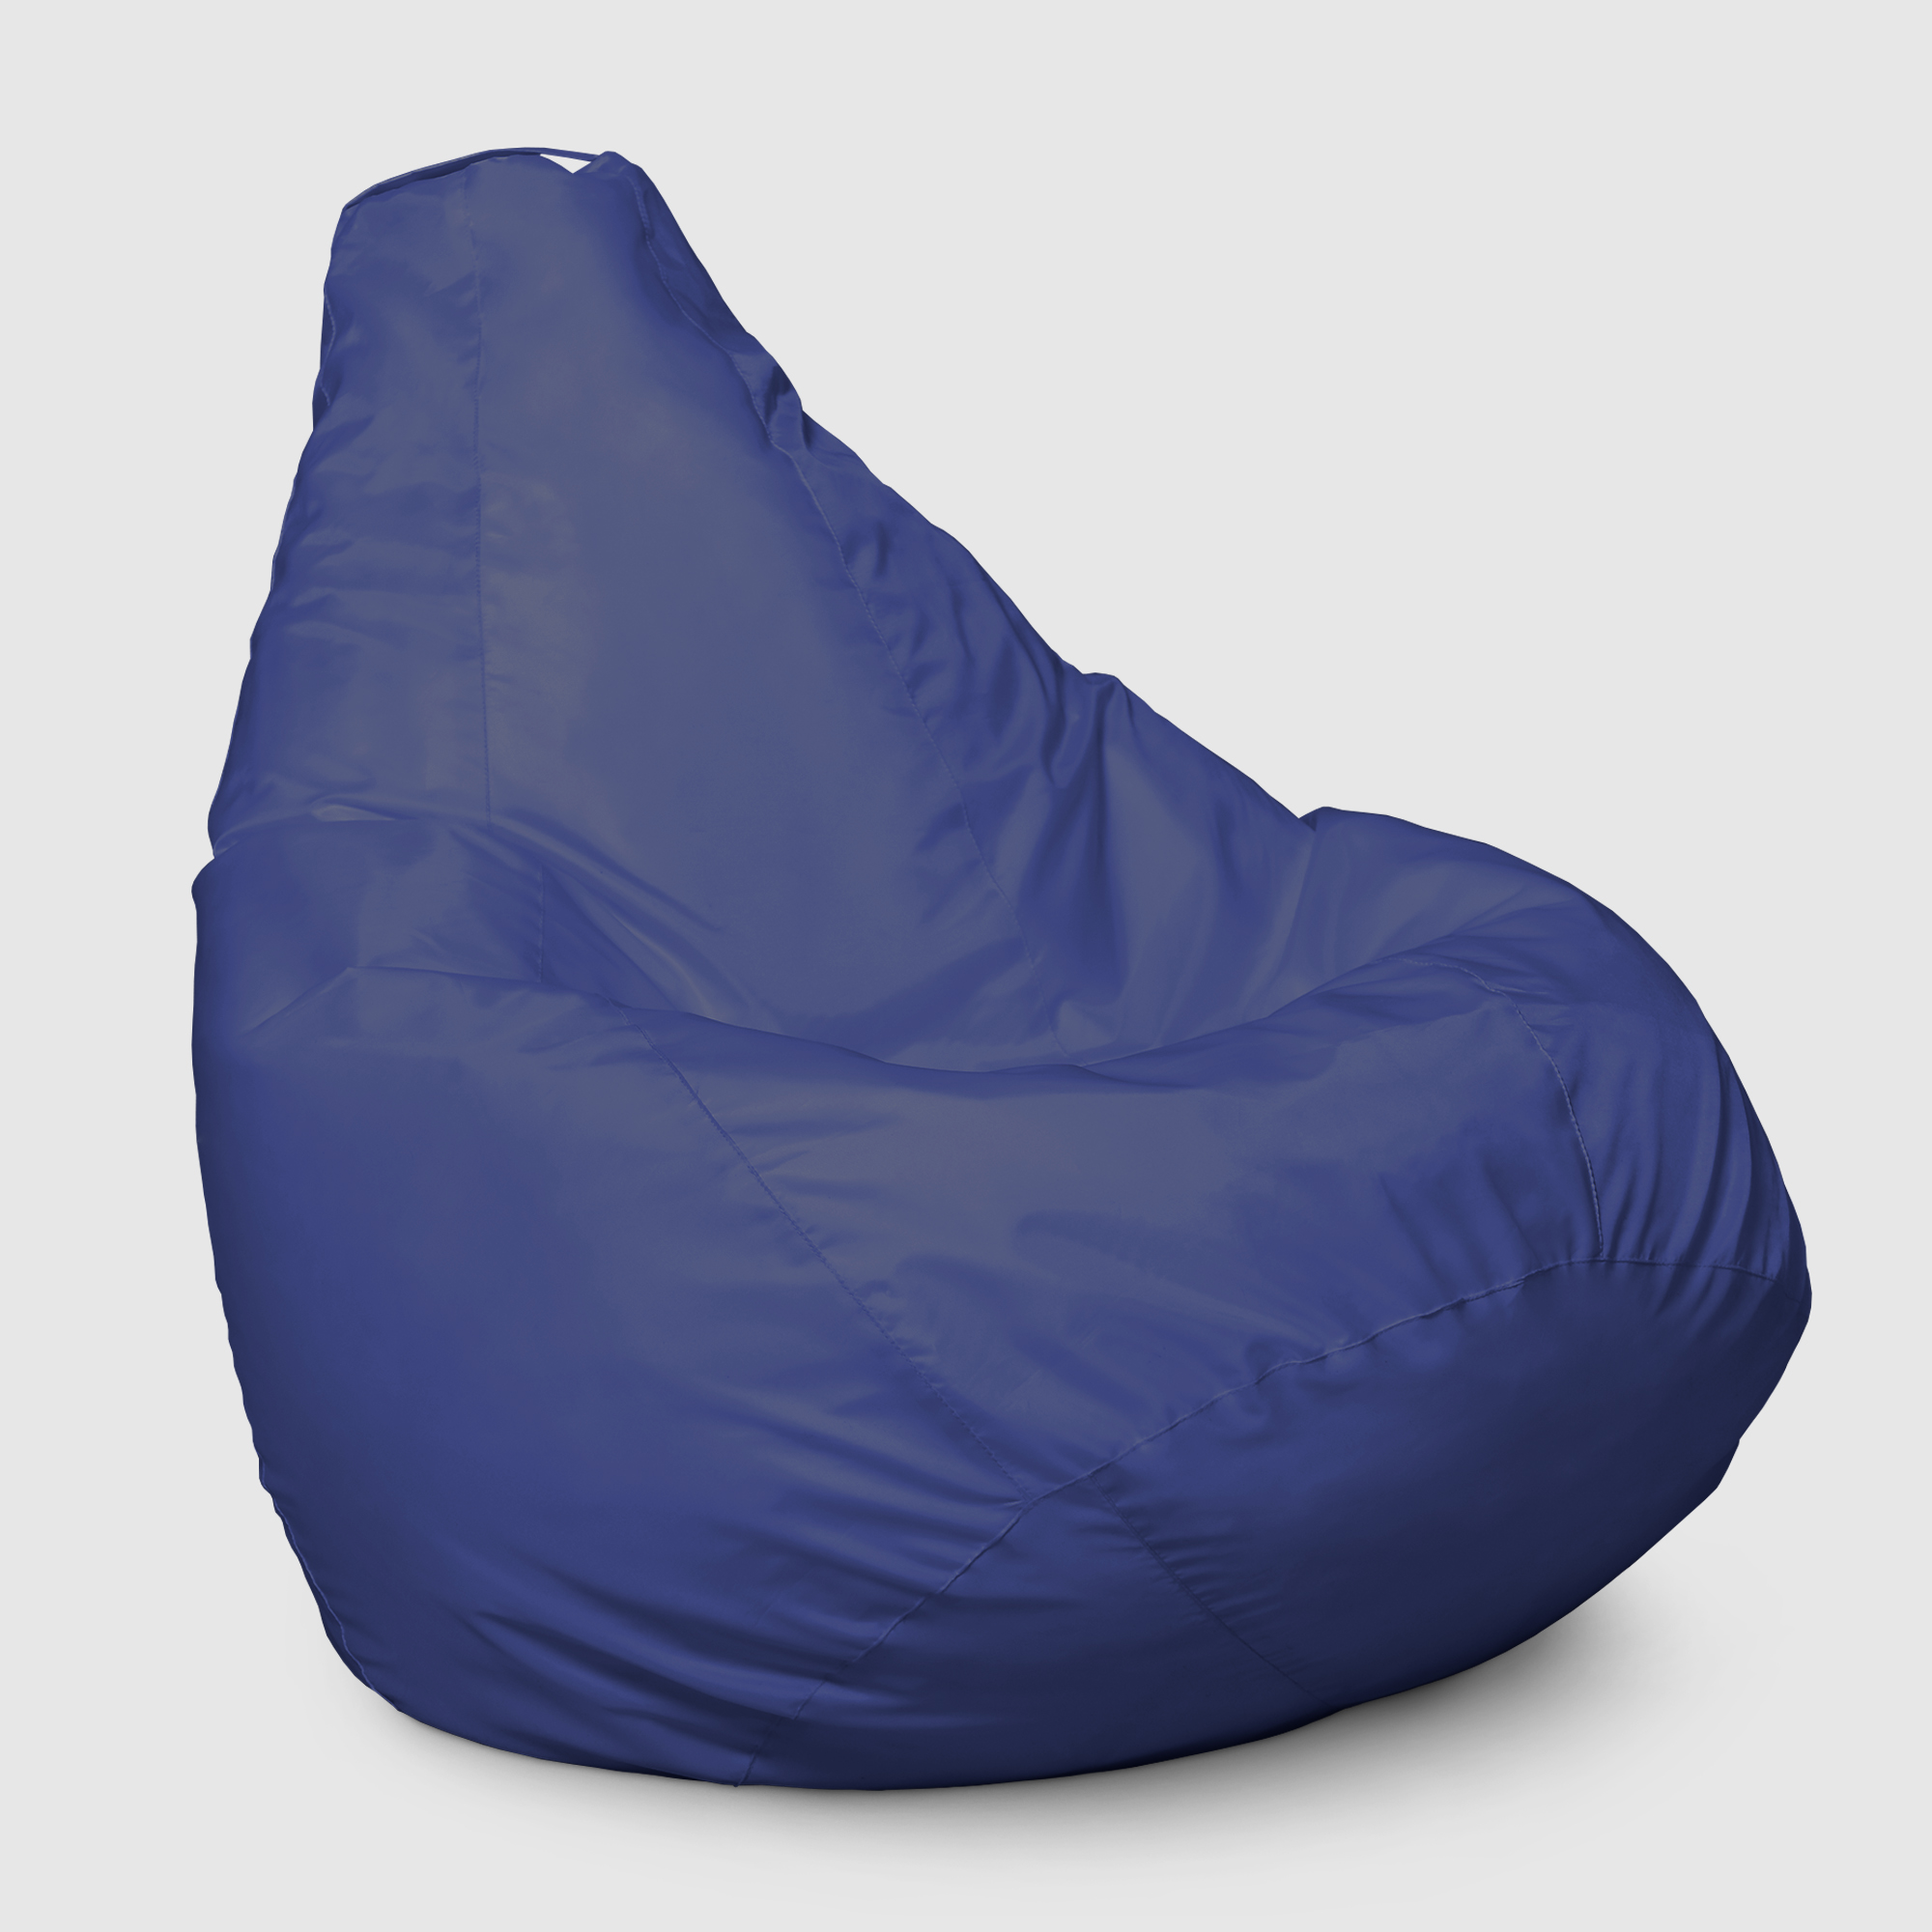 Кресло мешок Dreambag Меган xl темно-синее 85х85х125 см кресло мешок dreambag меган xl розовое 85х85х125см